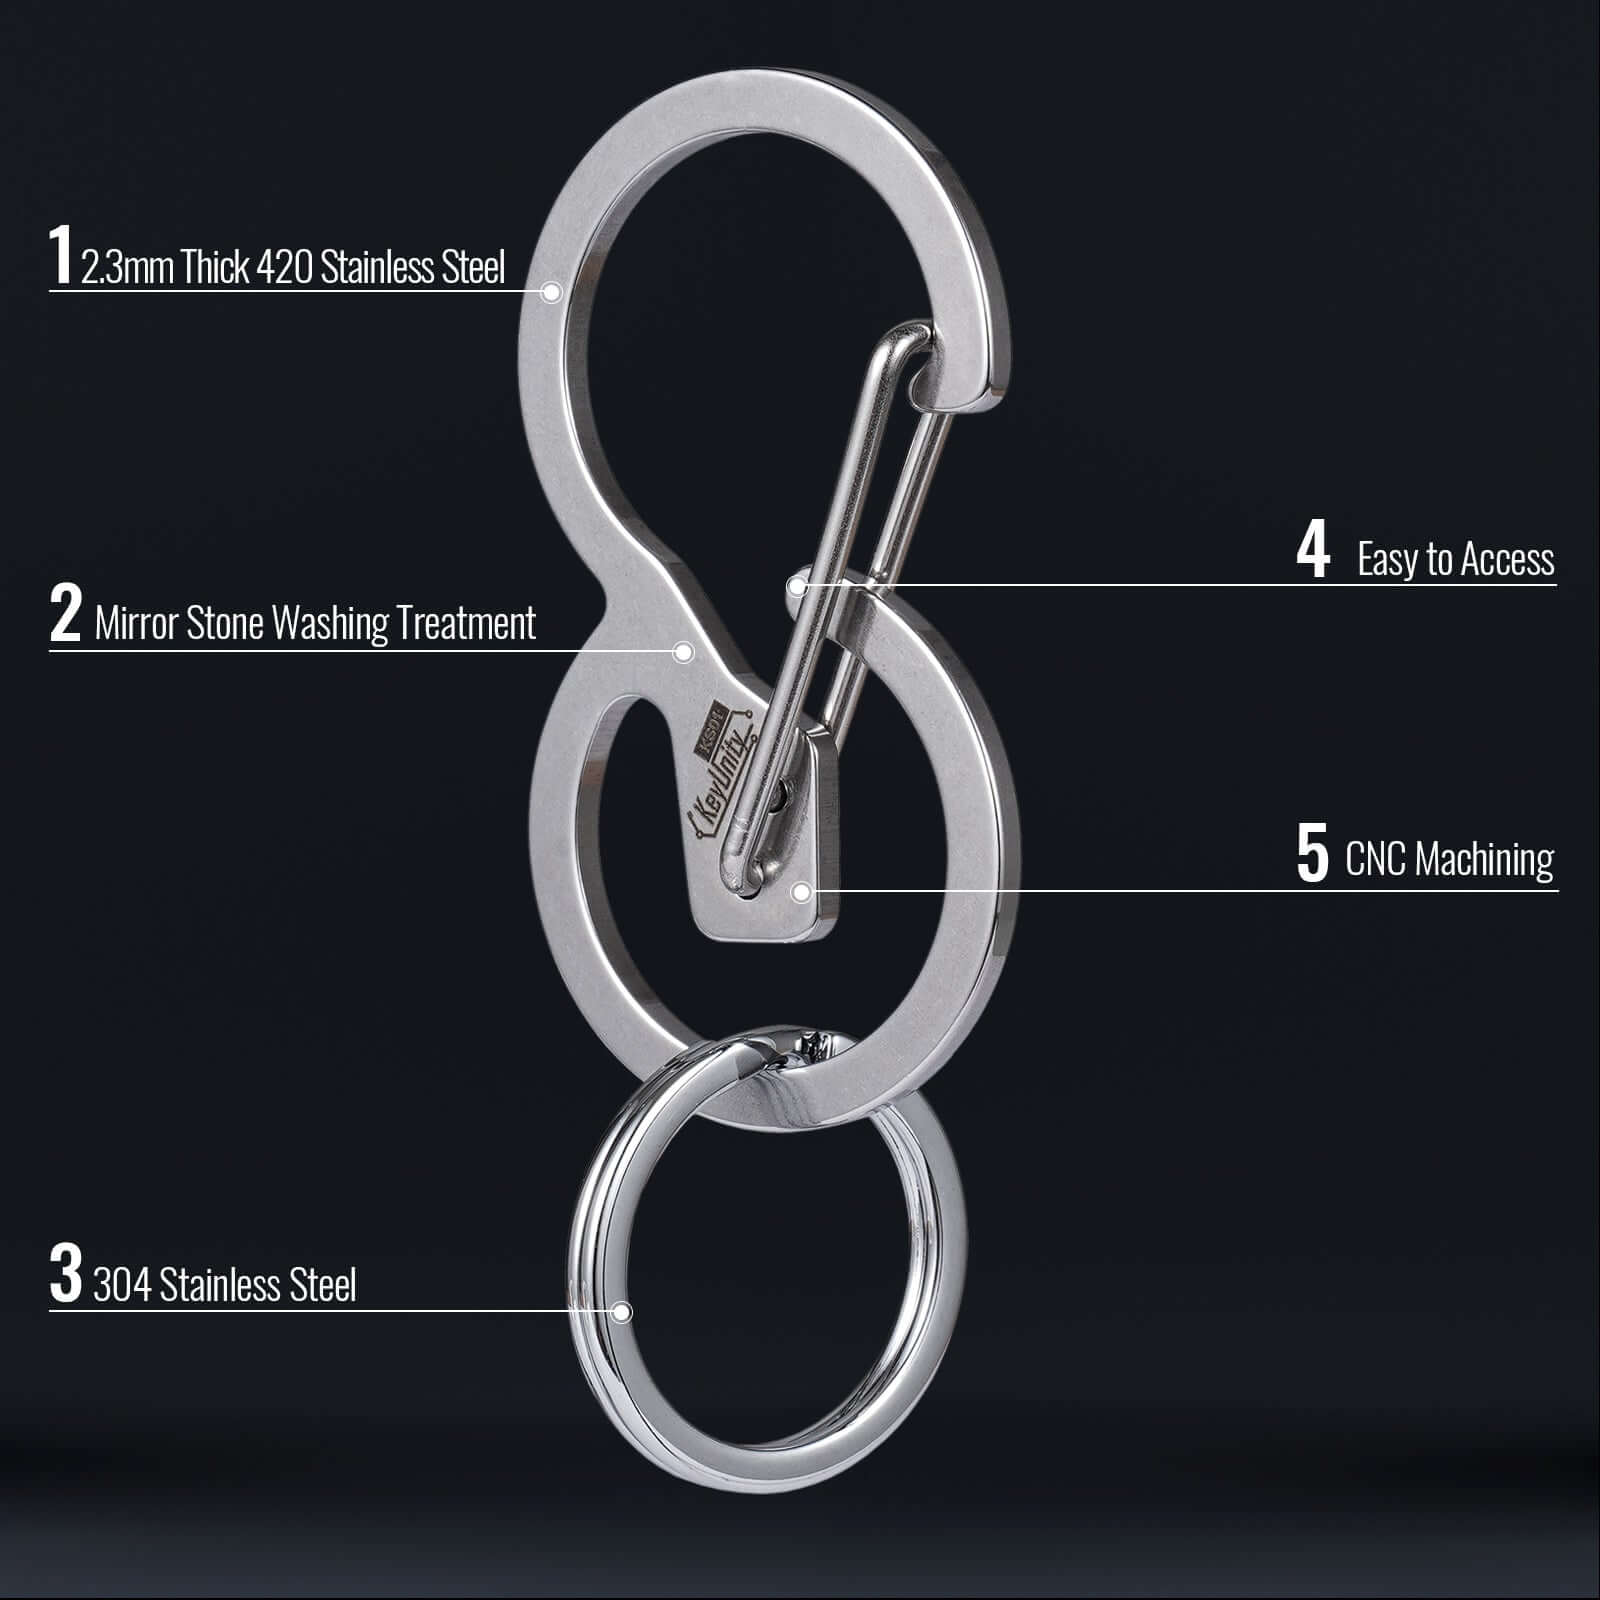 KeyUnity Key Chain, KS05 Stainless Steel Carabiner Sets Mini Clips for  Keys, Flashlight and Whistles, Black